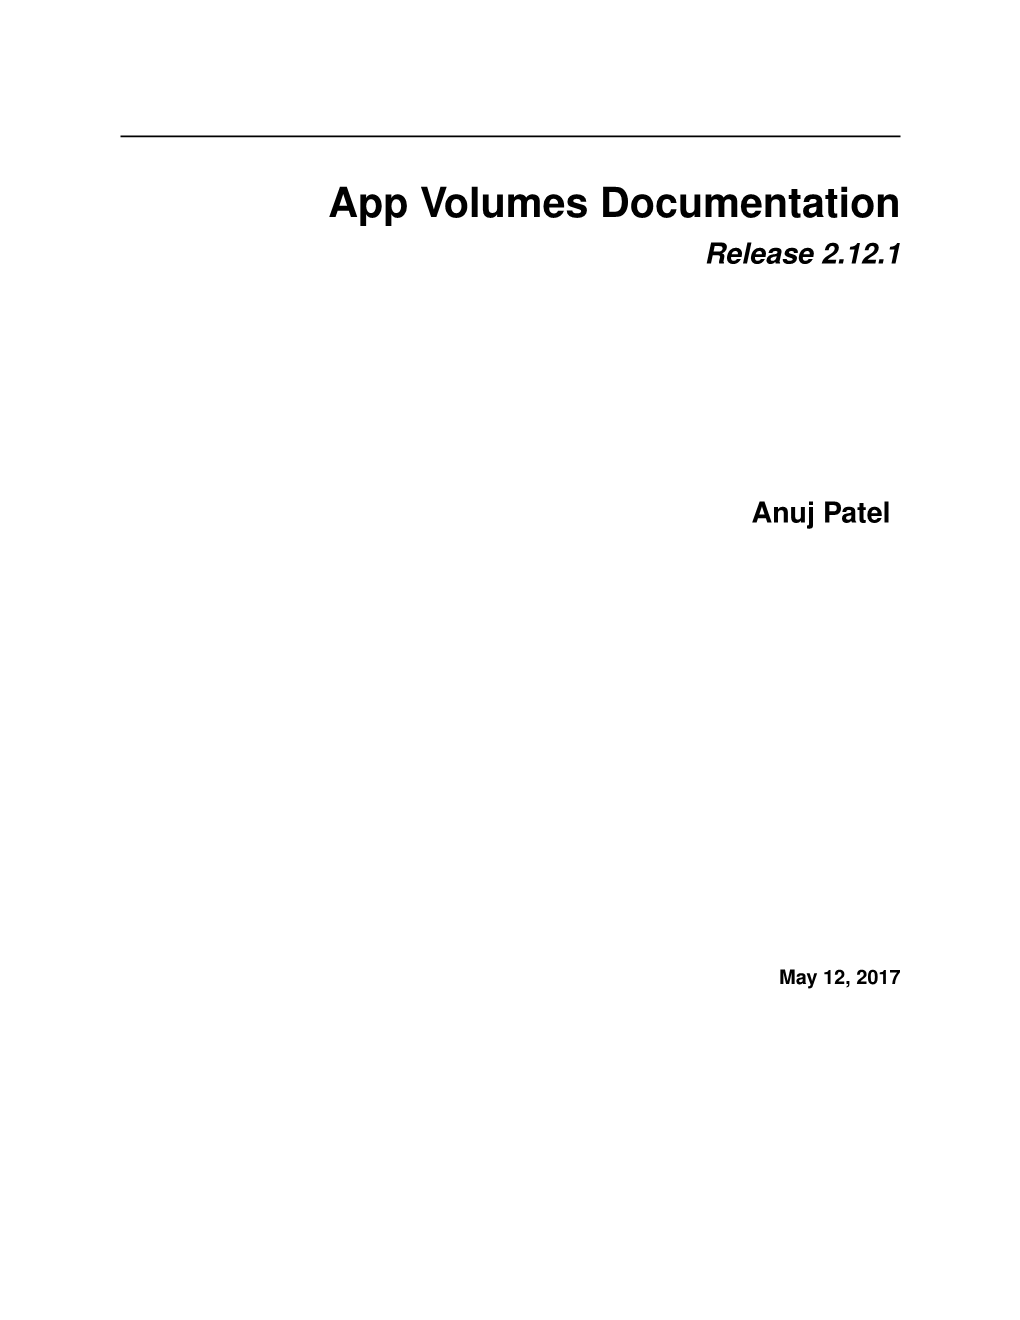 App Volumes Documentation Release 2.12.1